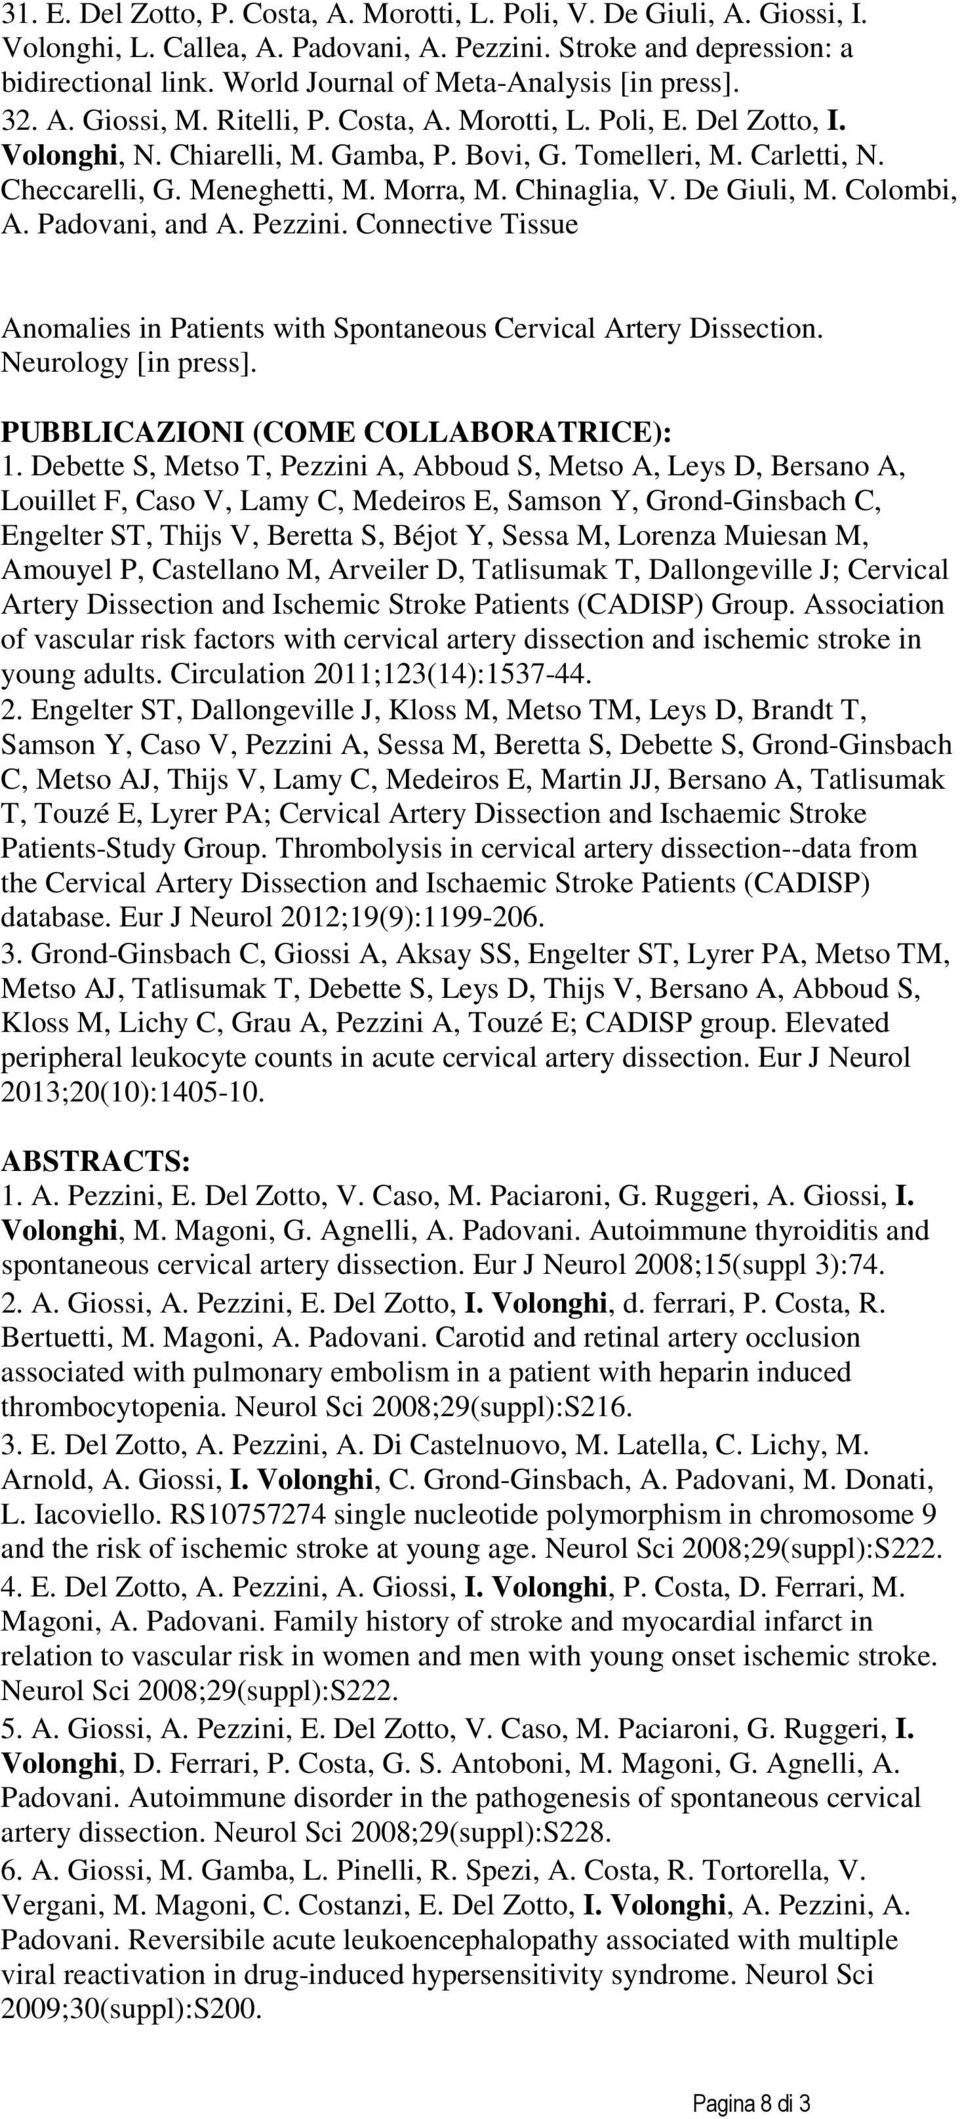 Checcarelli, G. Meneghetti, M. Morra, M. Chinaglia, V. De Giuli, M. Colombi, A. Padovani, and A. Pezzini. Connective Tissue Anomalies in Patients with Spontaneous Cervical Artery Dissection.